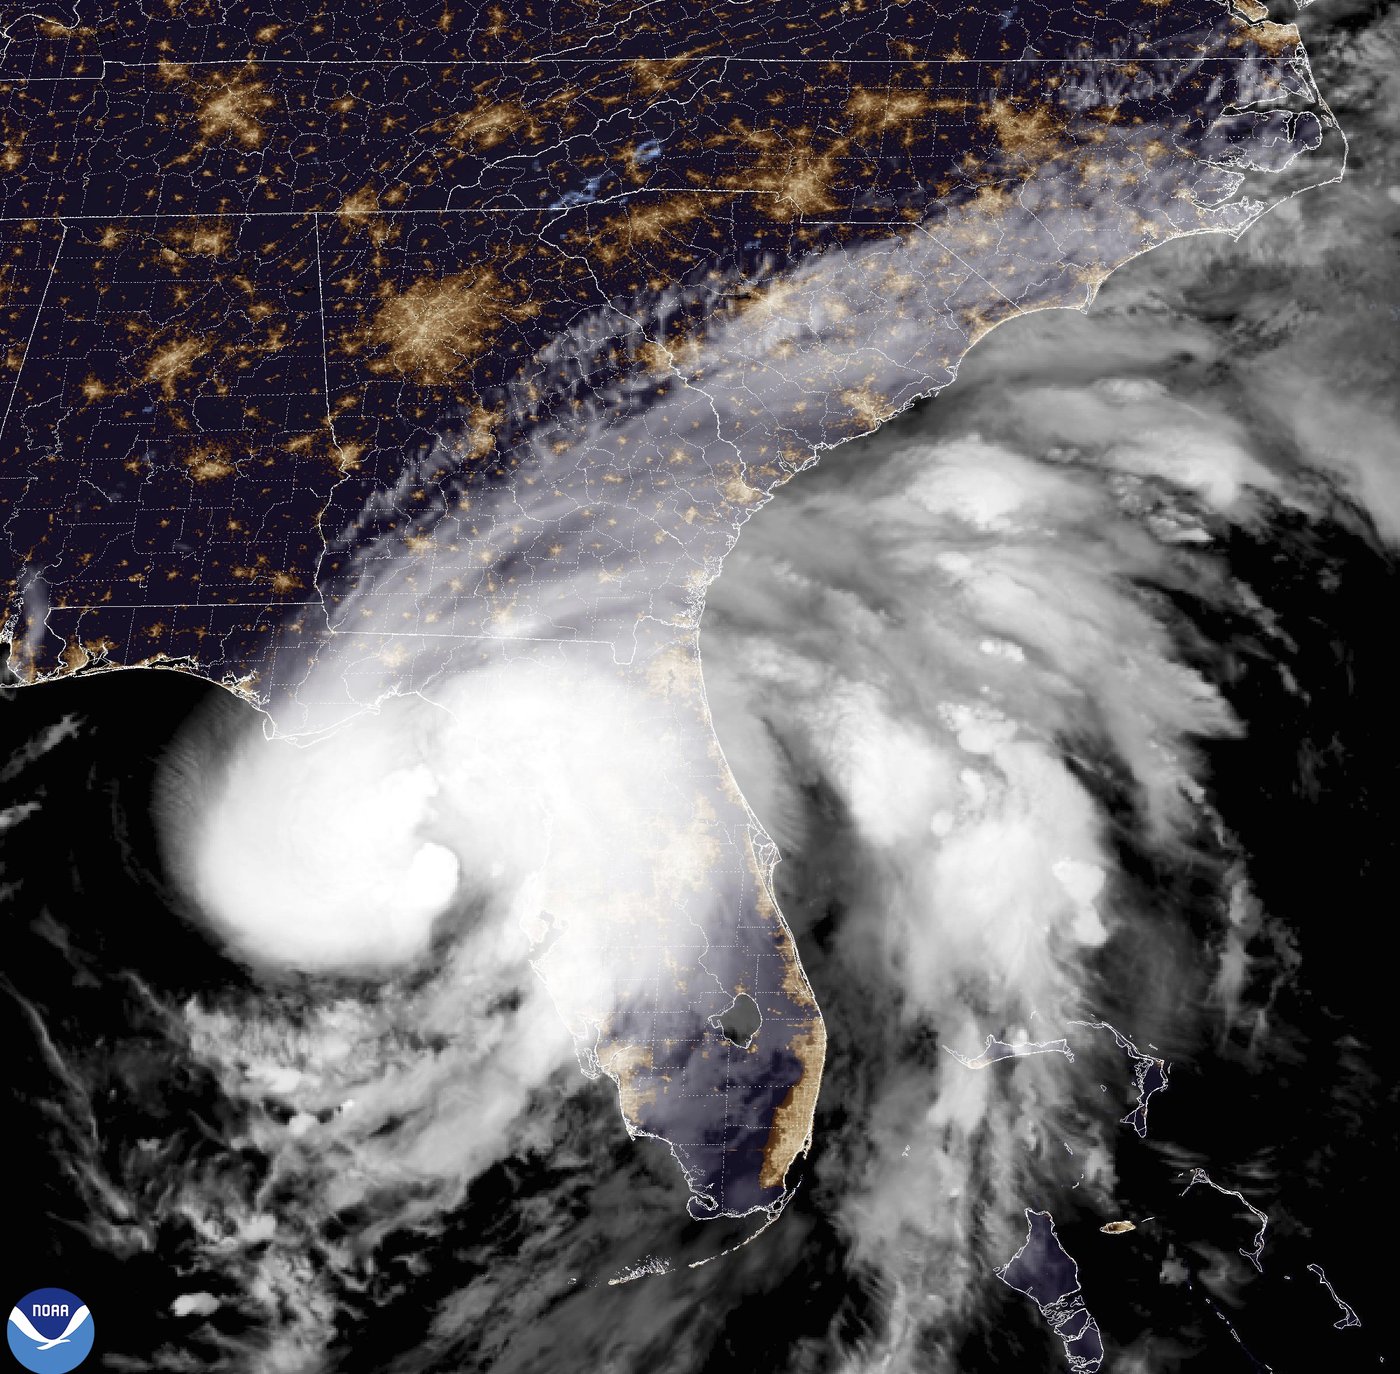 L’ouragan Debby, de catégorie 1, a touché terre en Floride lundi matin